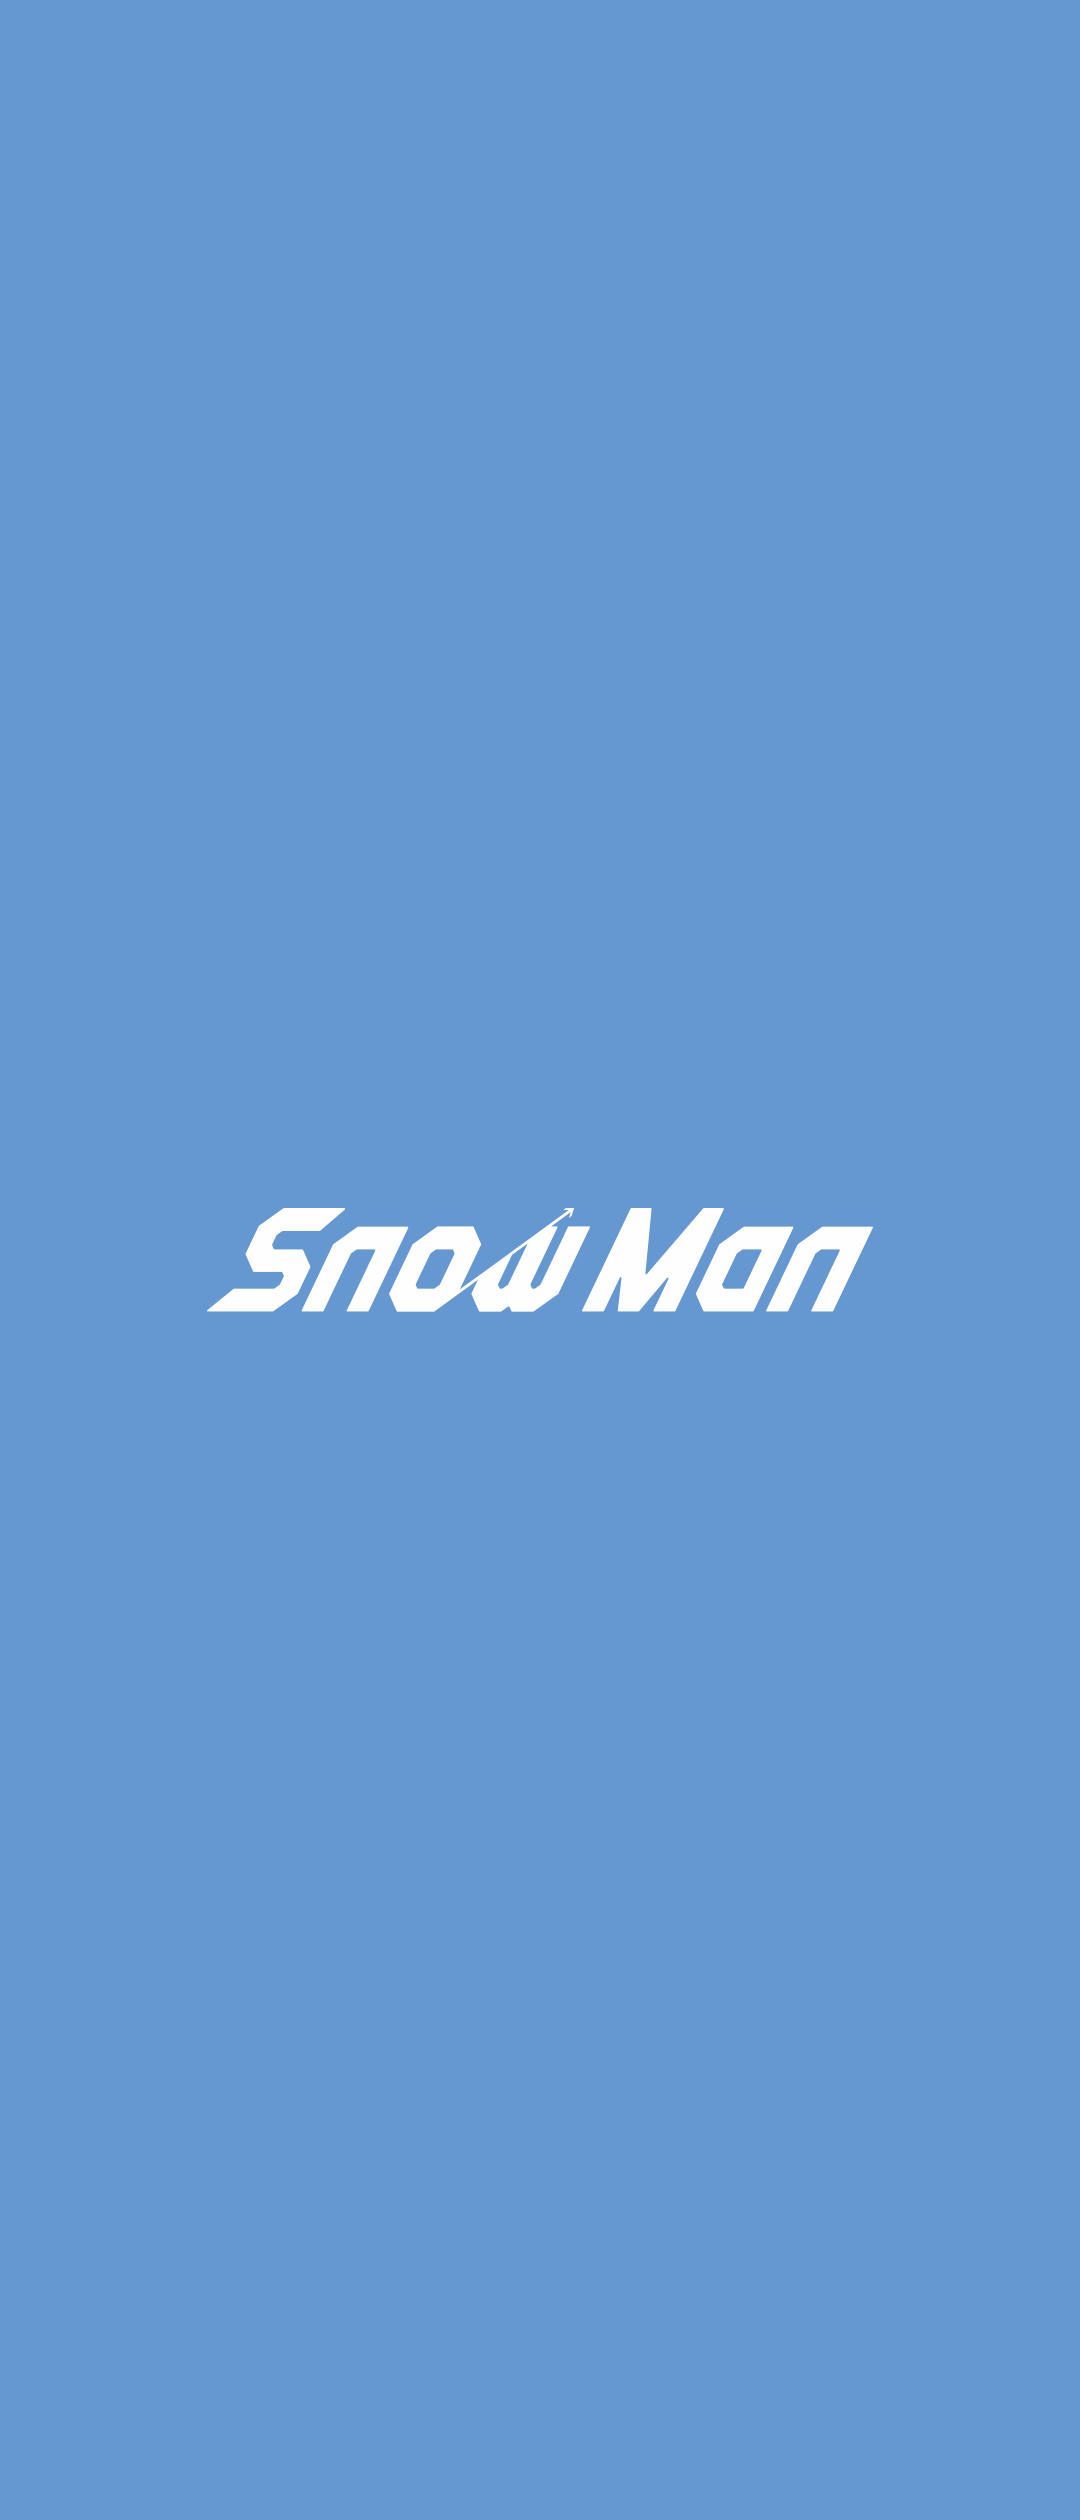 Snow Manのロゴ Xperia 5 壁紙 待ち受け スマラン